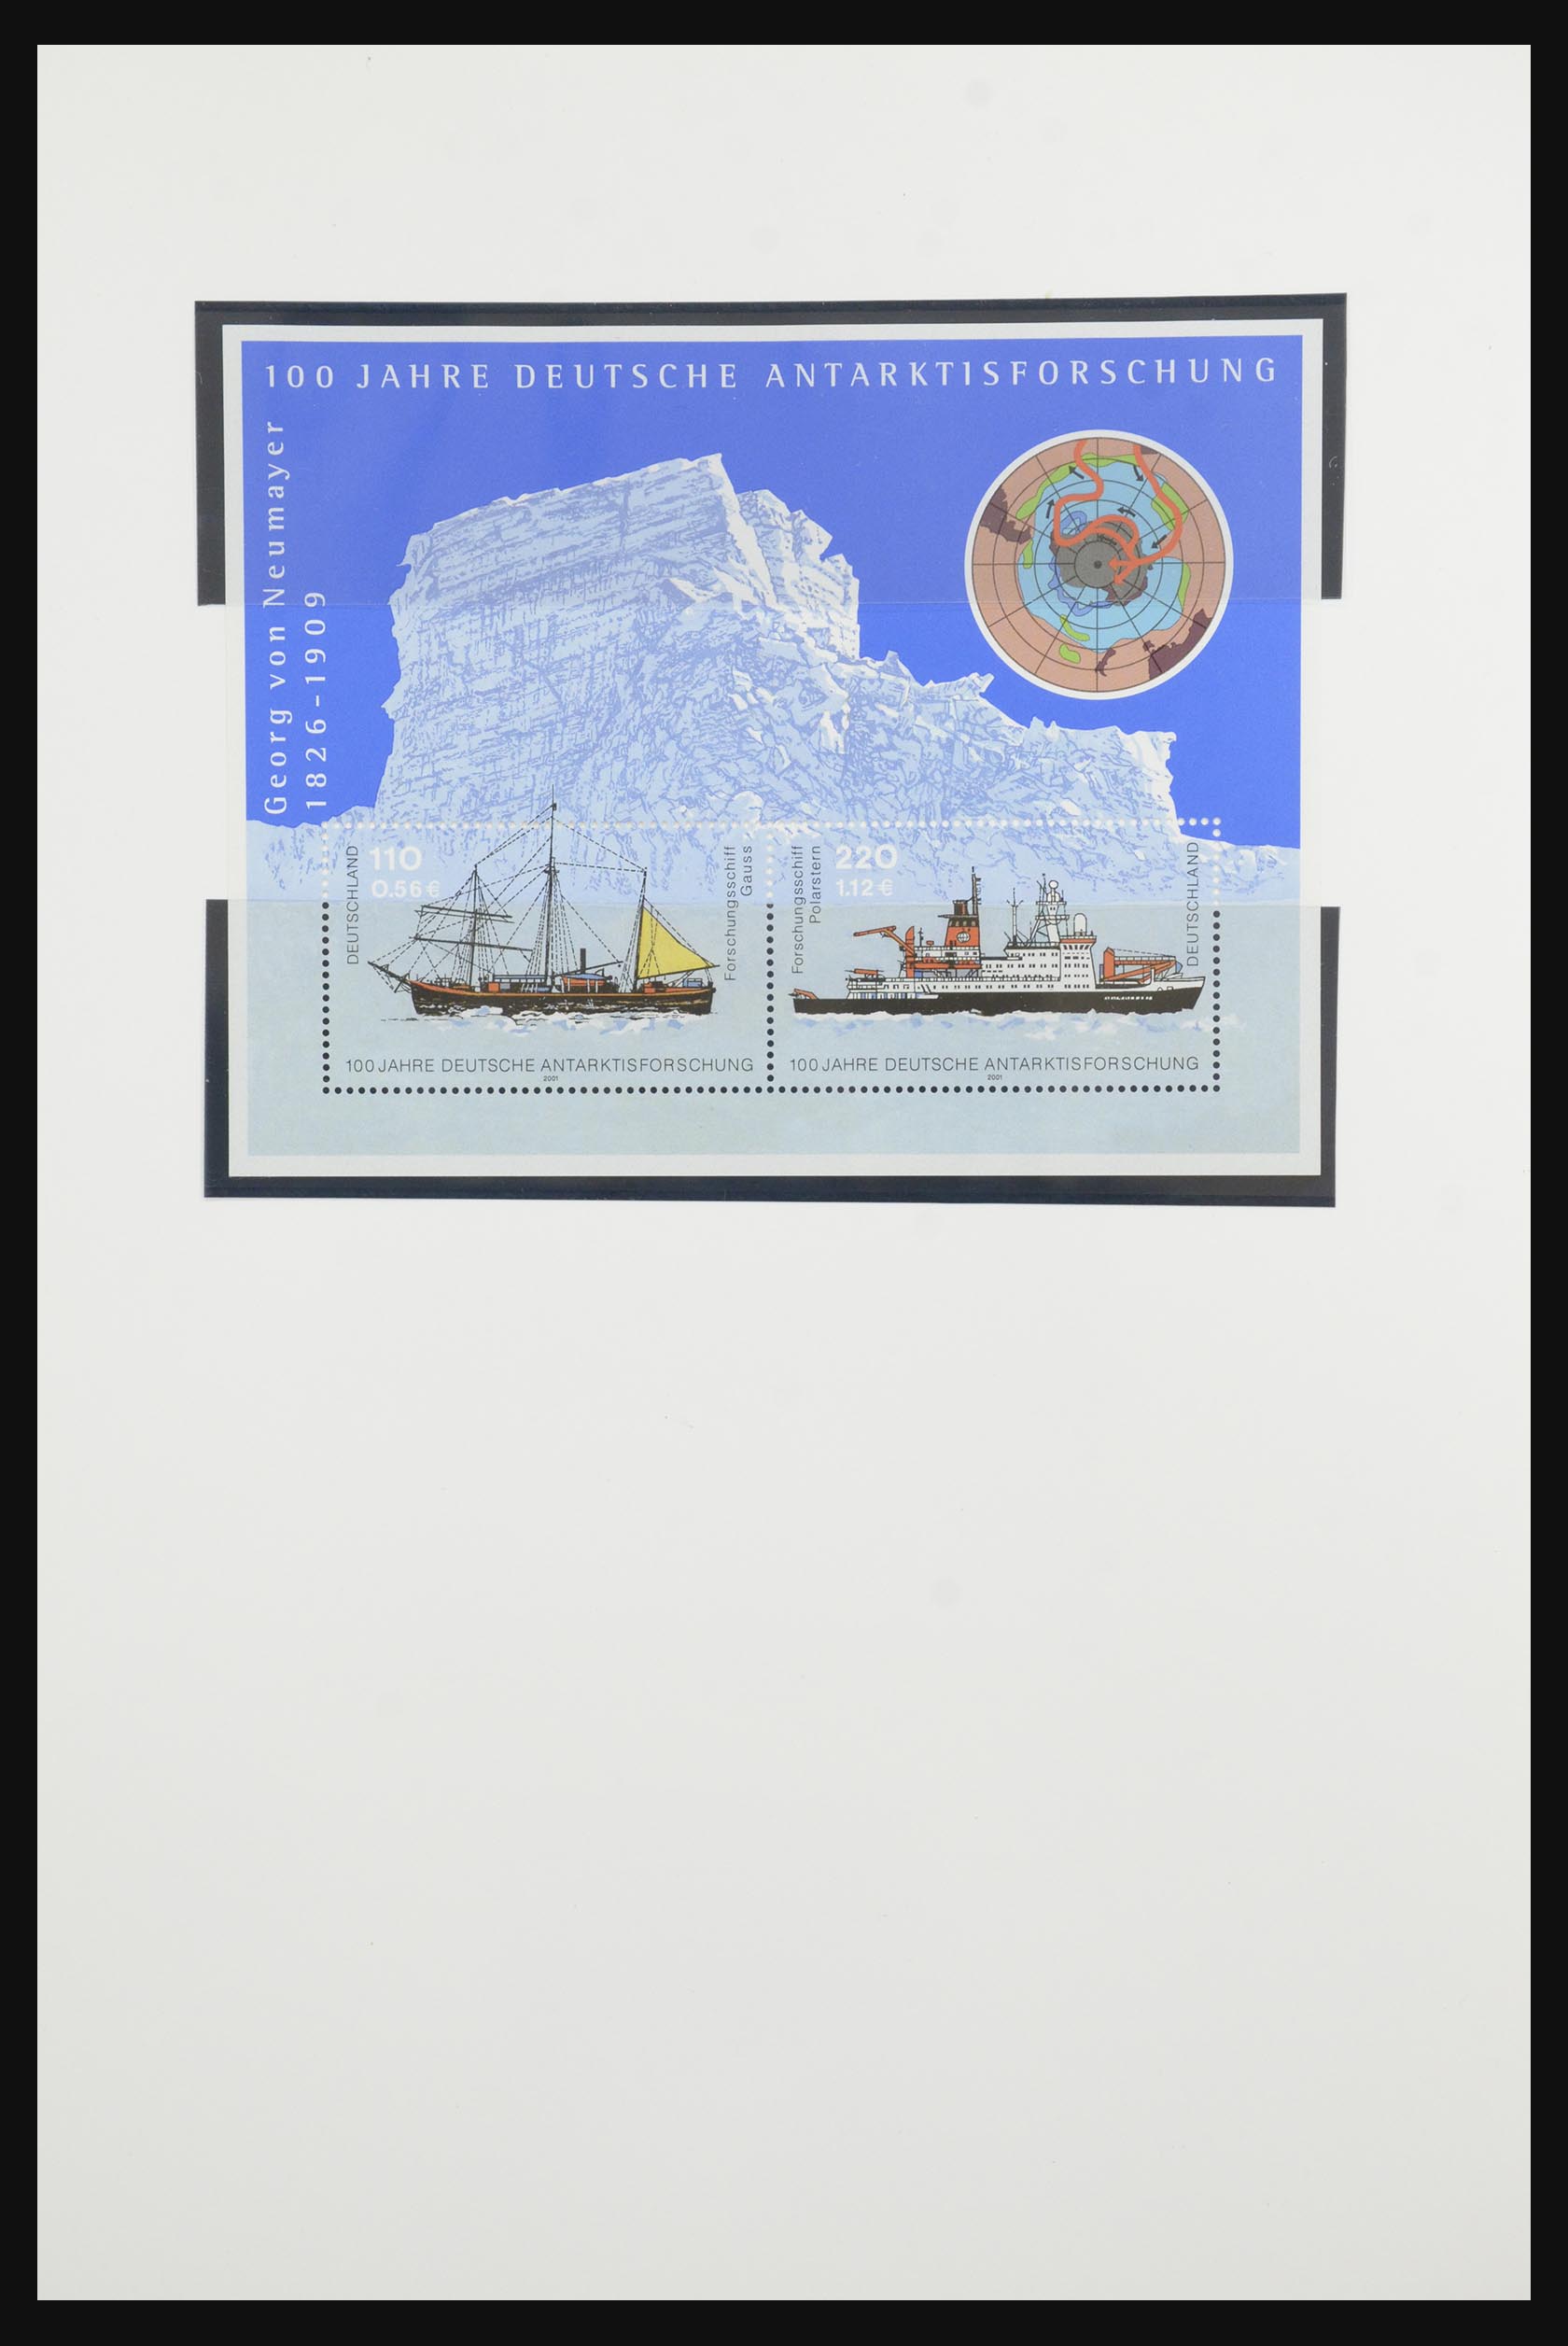 31659 055 - 31659 Motief: Antarctica en Arctica 1880-1998.